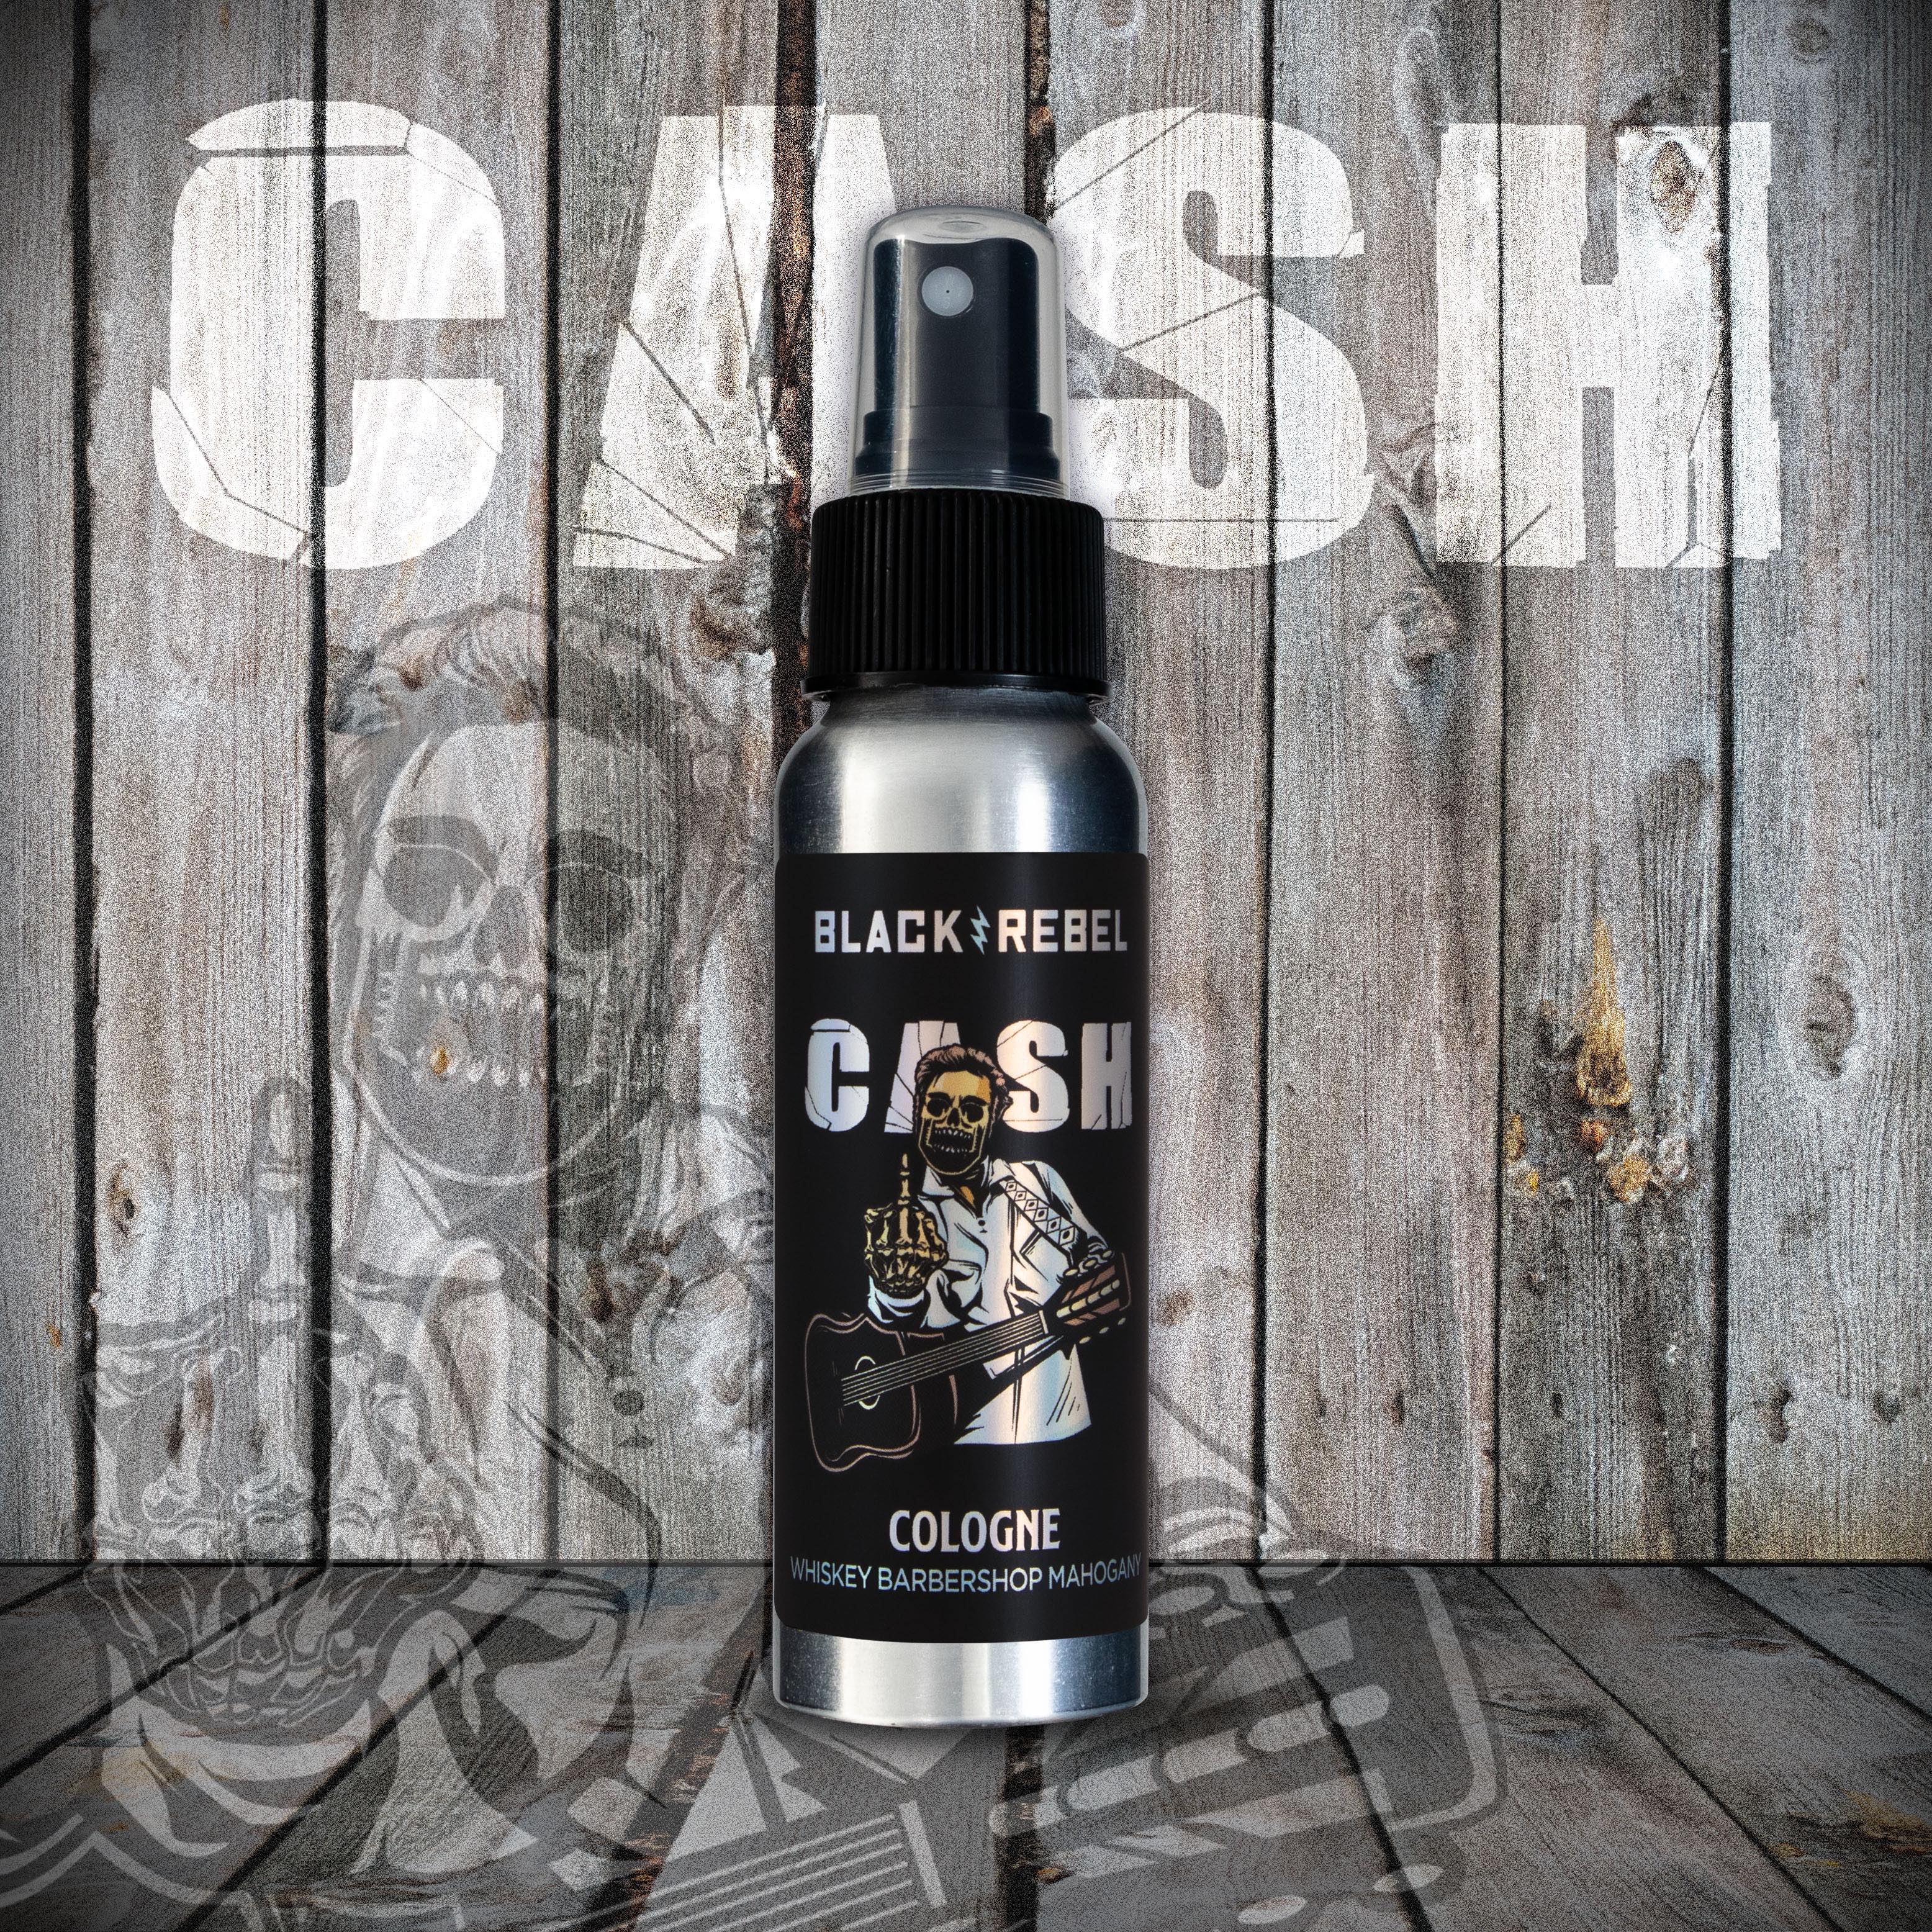 THE CASH (whiskey barbershop mahogany)